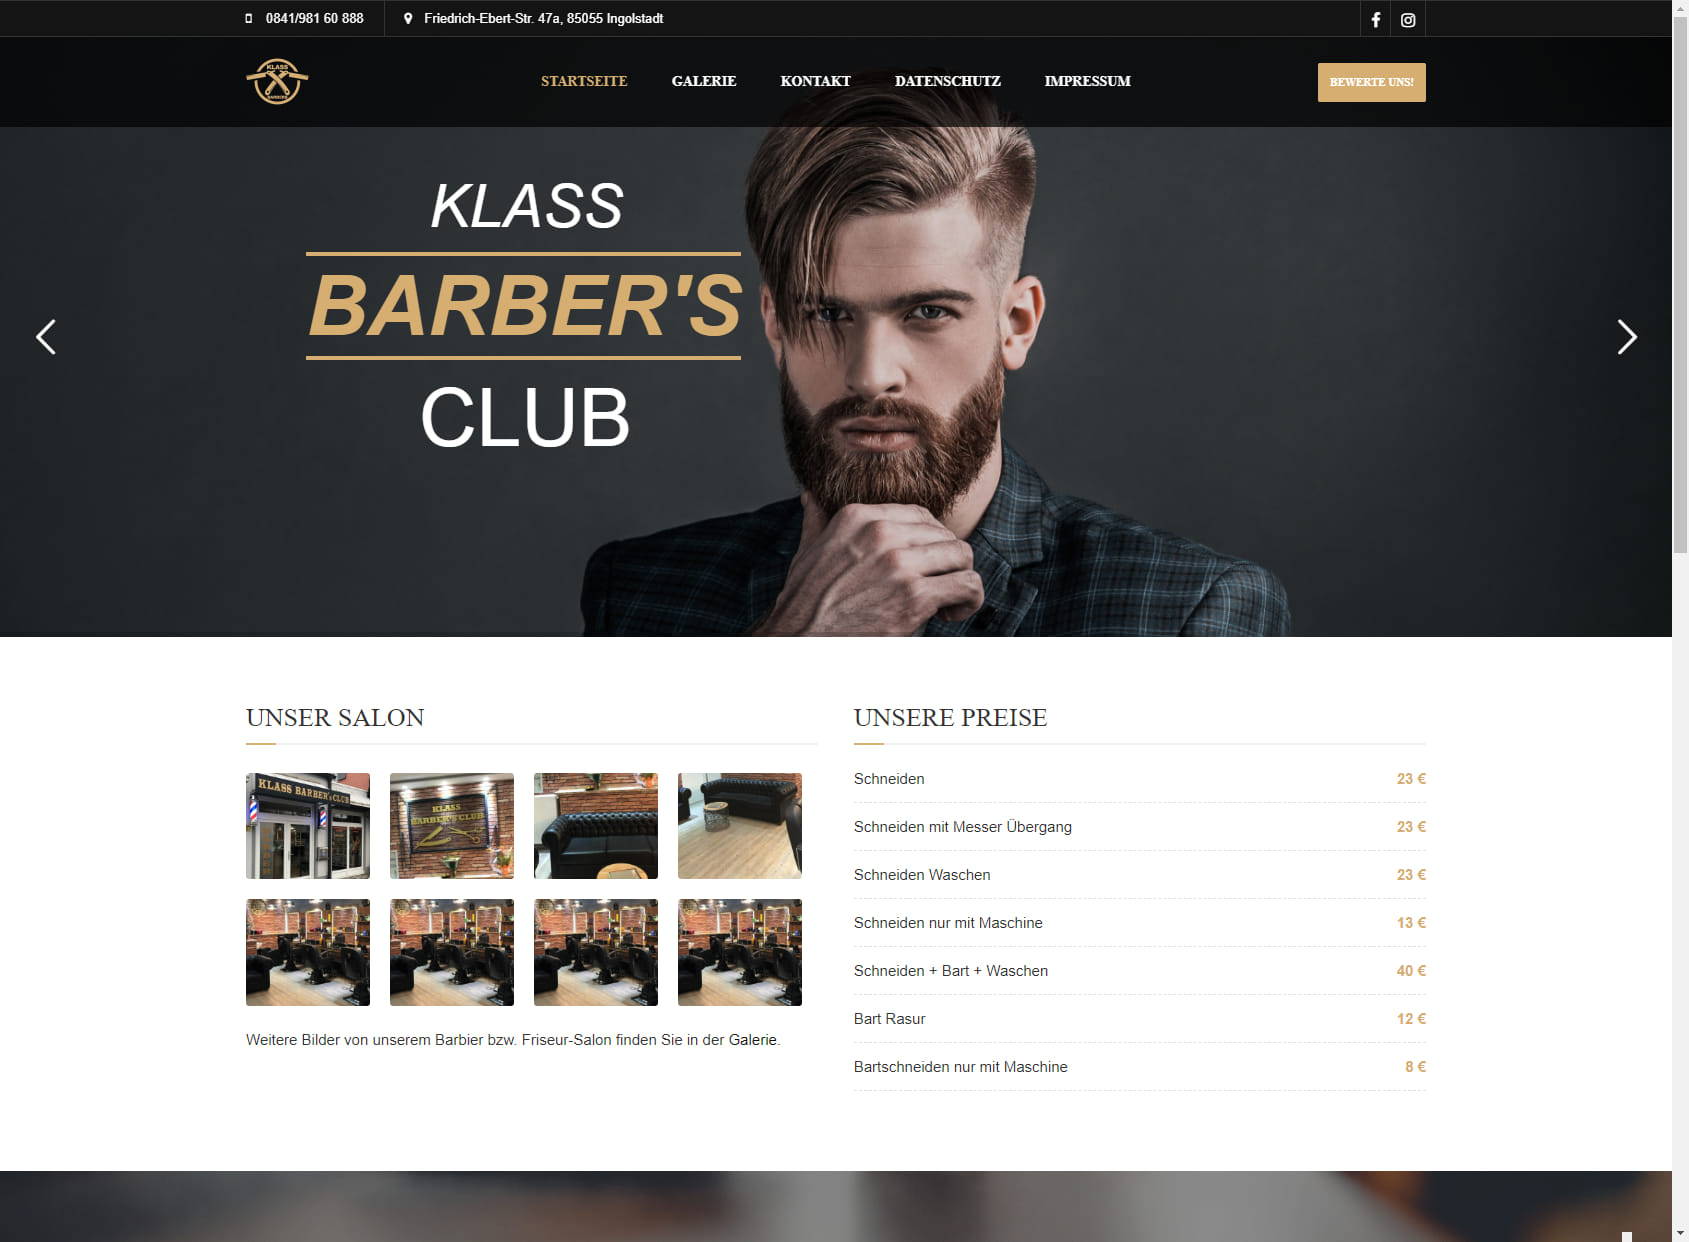 Klass Barber's Club